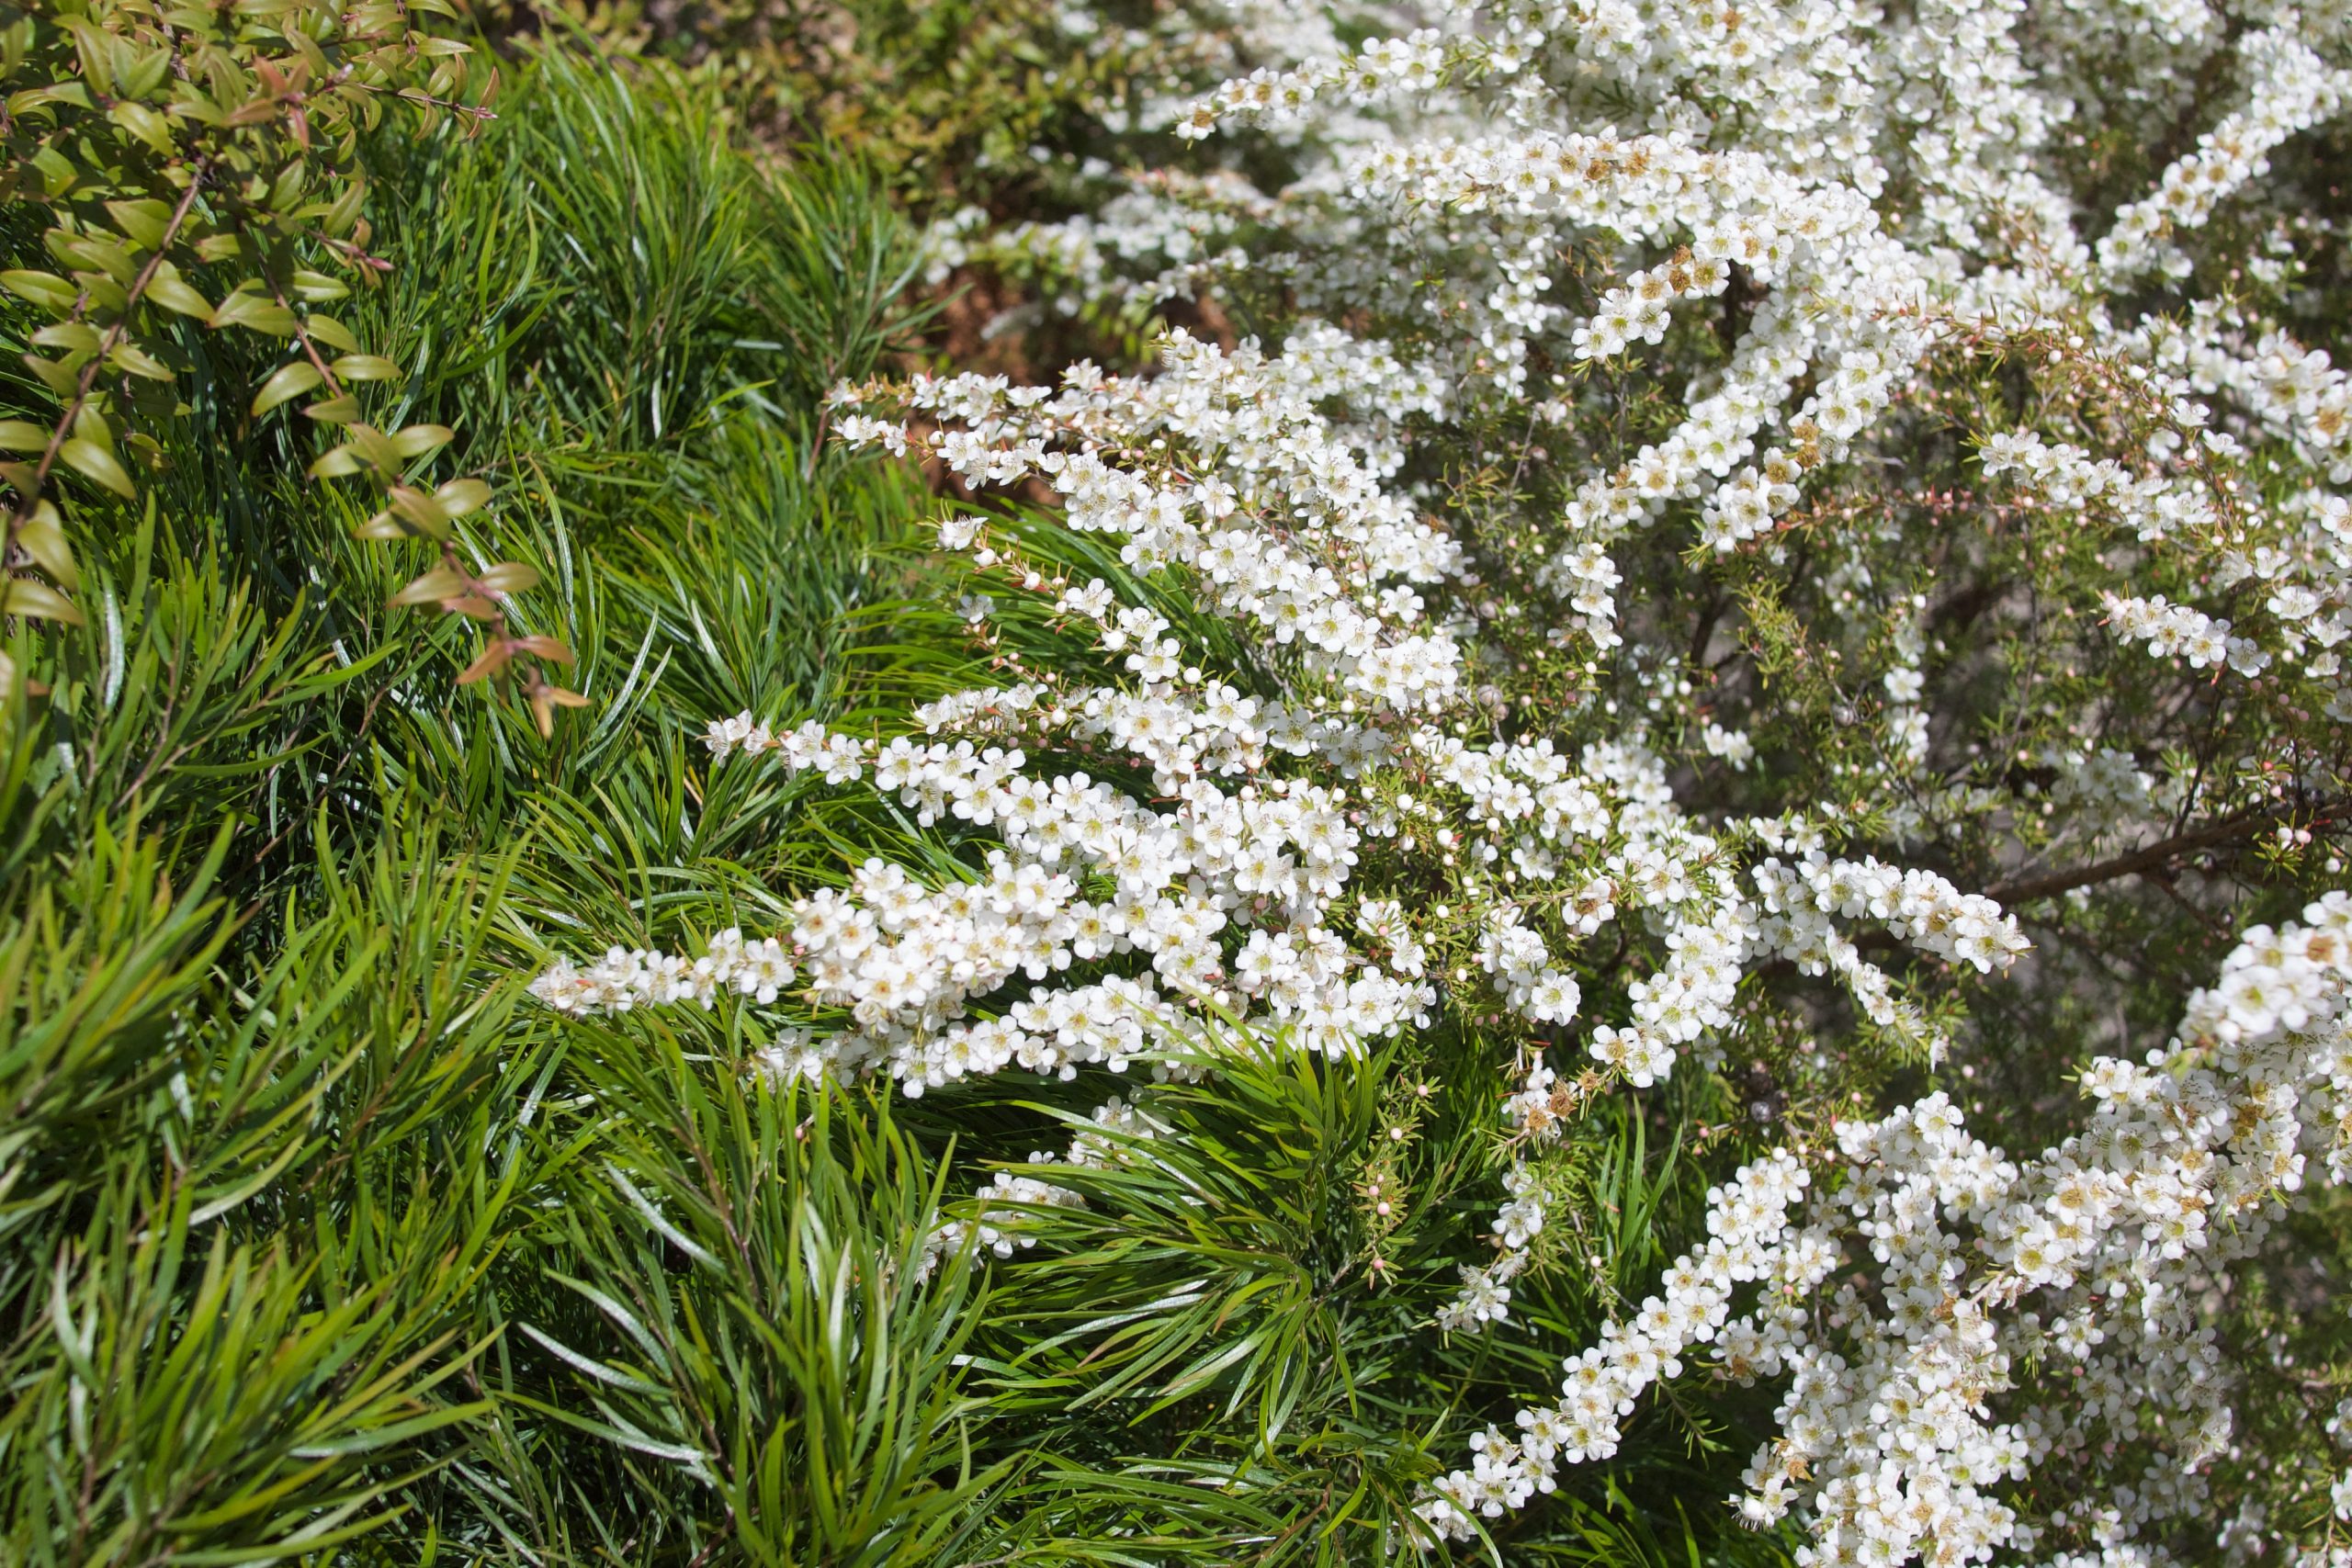 Leptospermum ‘Cardwell’: the most floriferous of them all